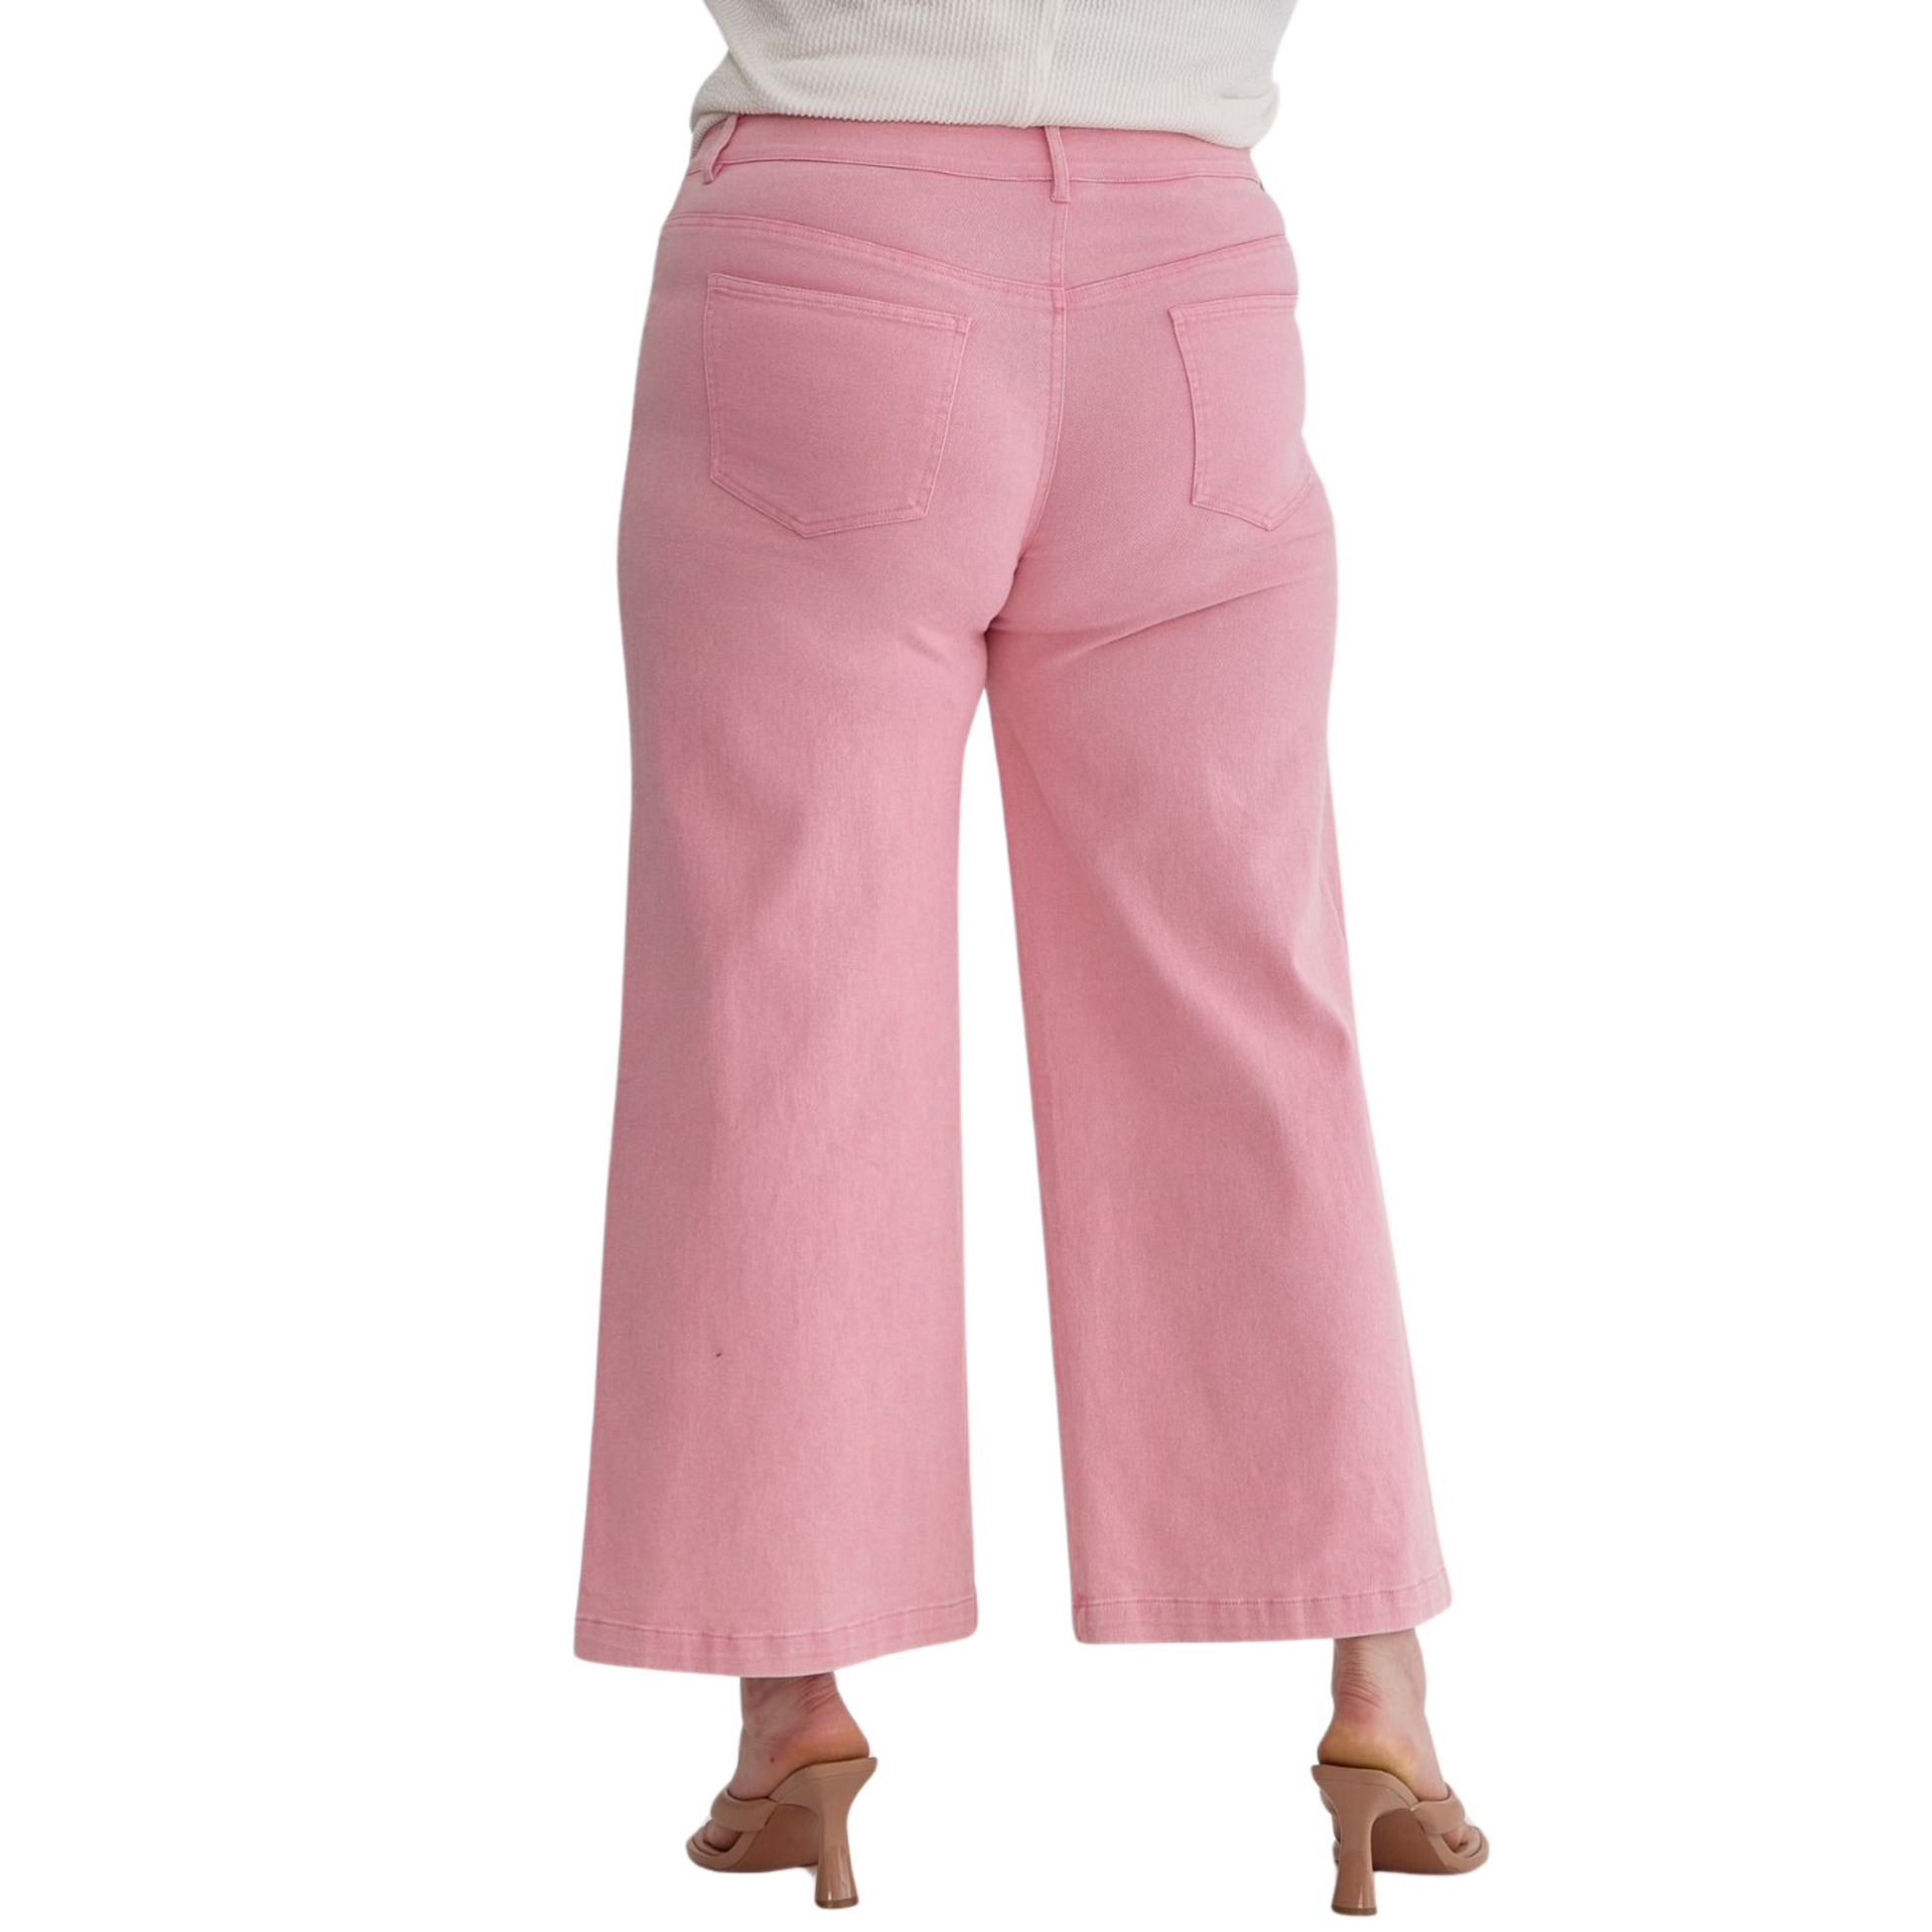 wide leg plus size denim pants in pink